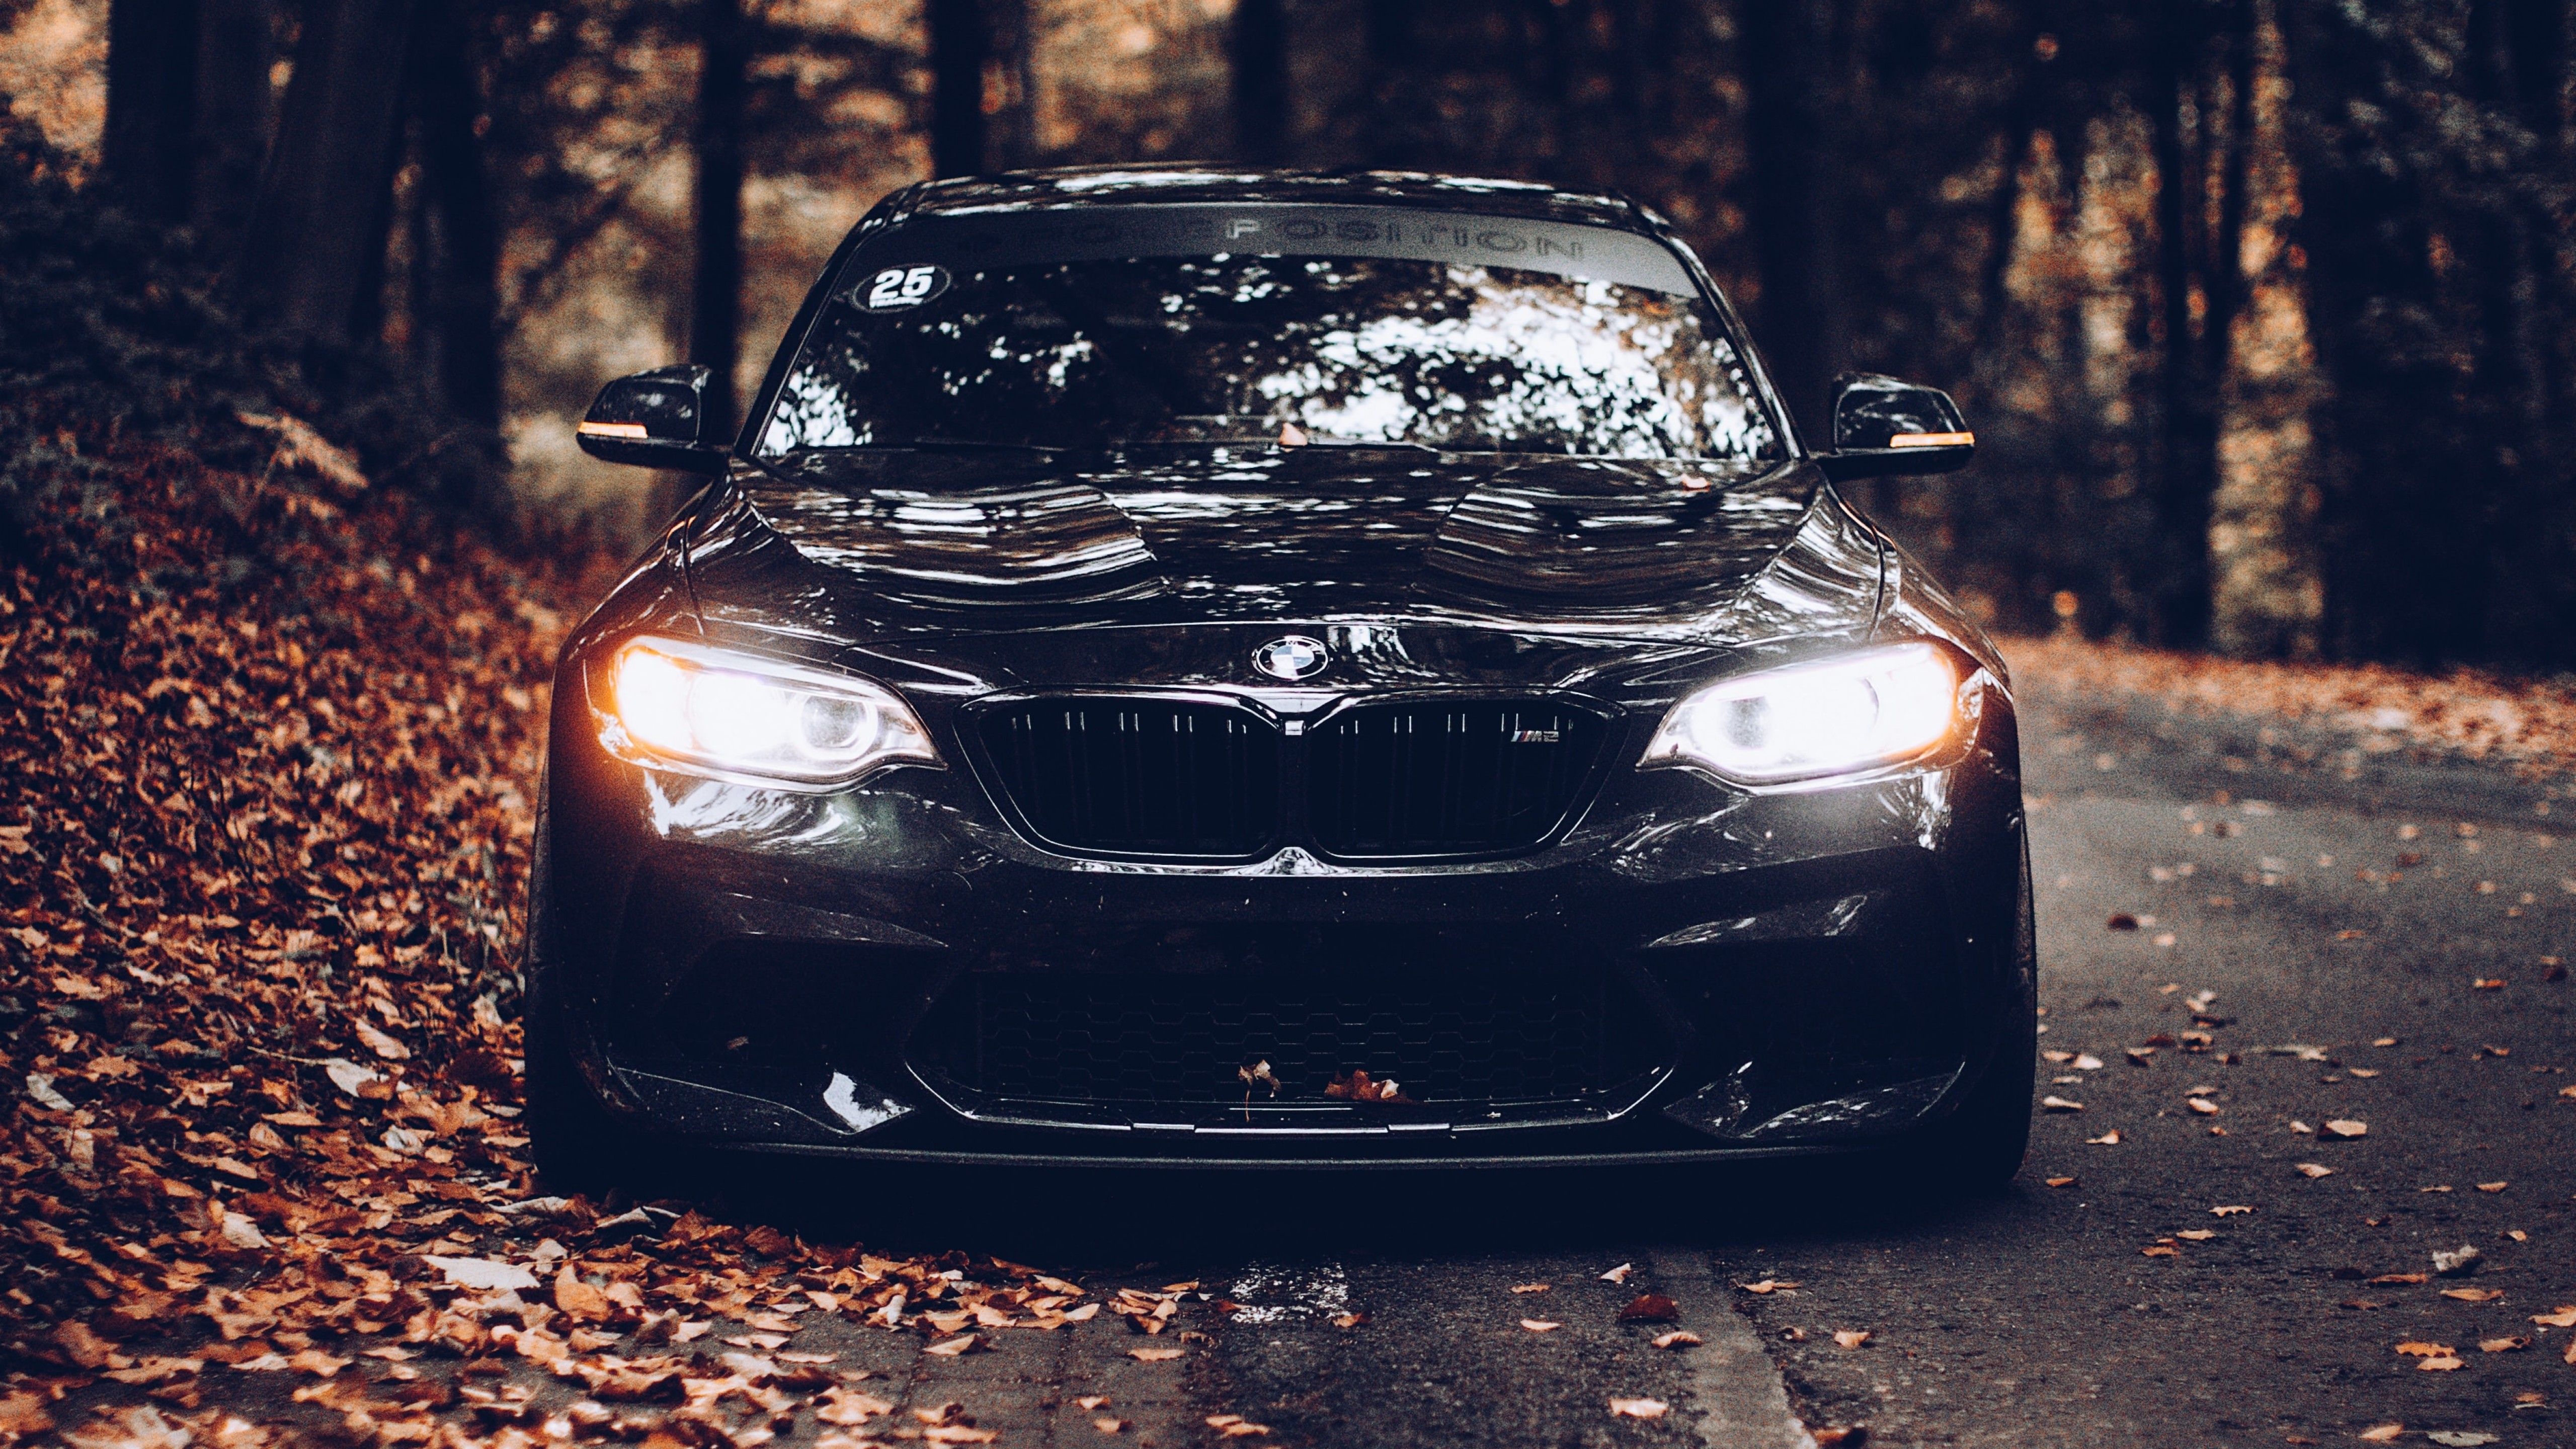 BMW 4K Wallpaper, Black cars, Cinematic, Autumn, Foliage, Road, Tarmac, Cars